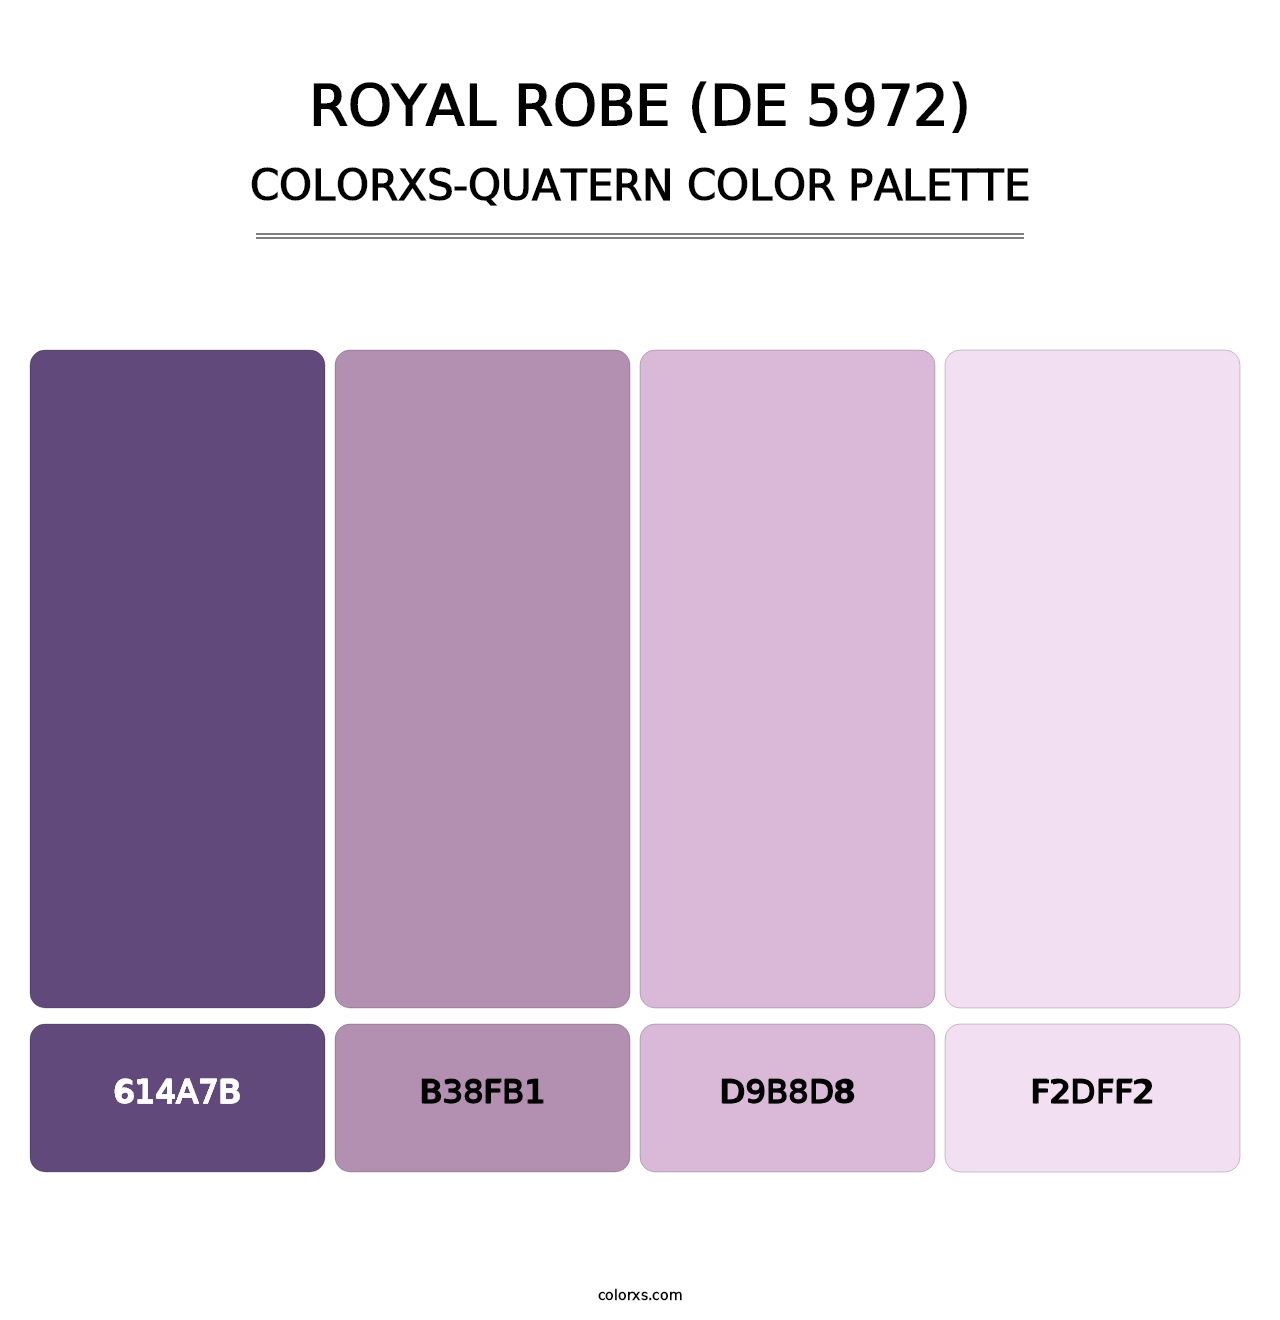 Royal Robe (DE 5972) - Colorxs Quatern Palette